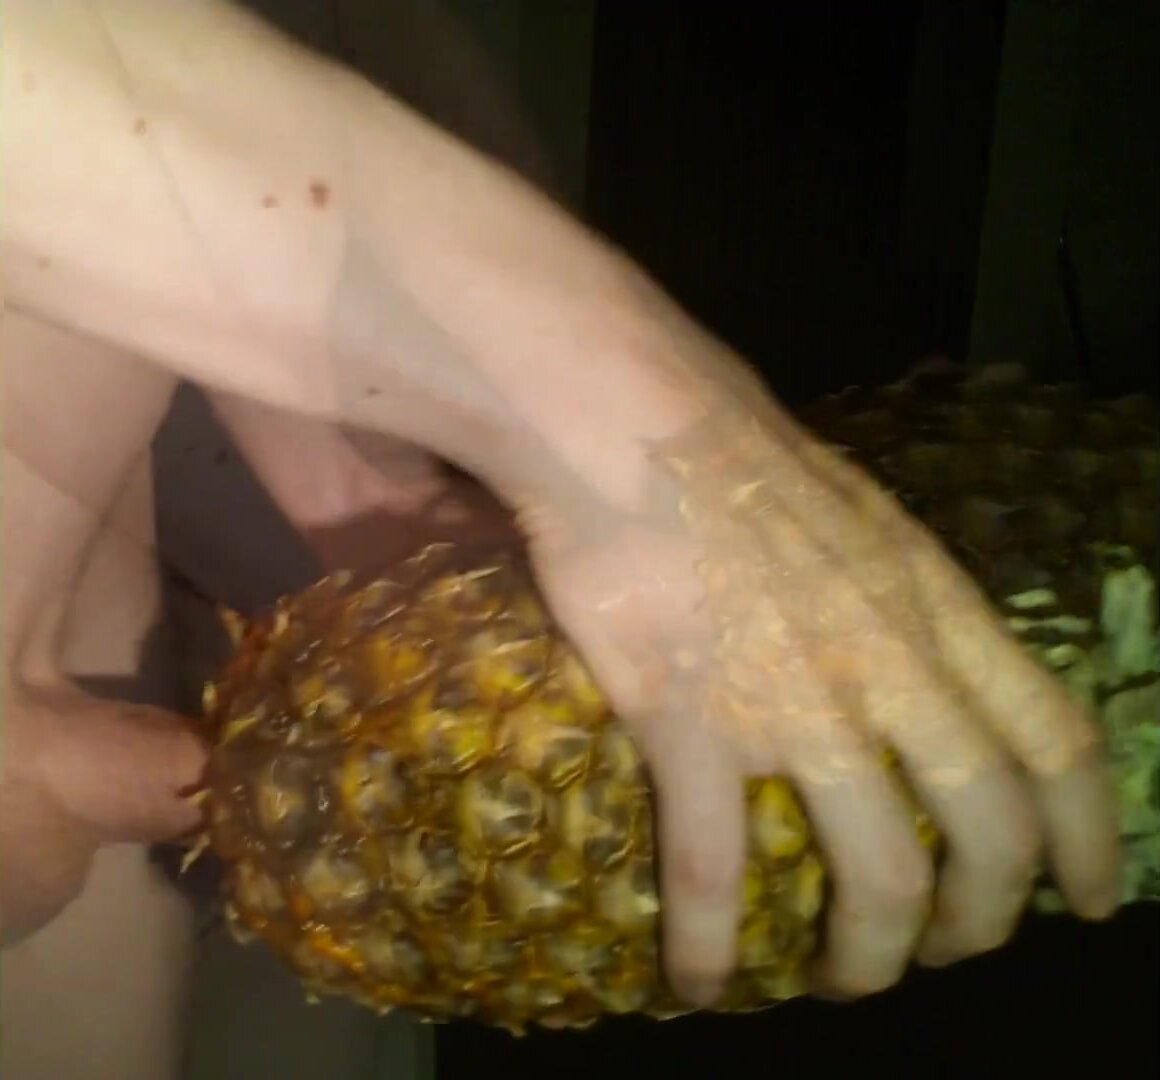 Pineapple juice - video 2